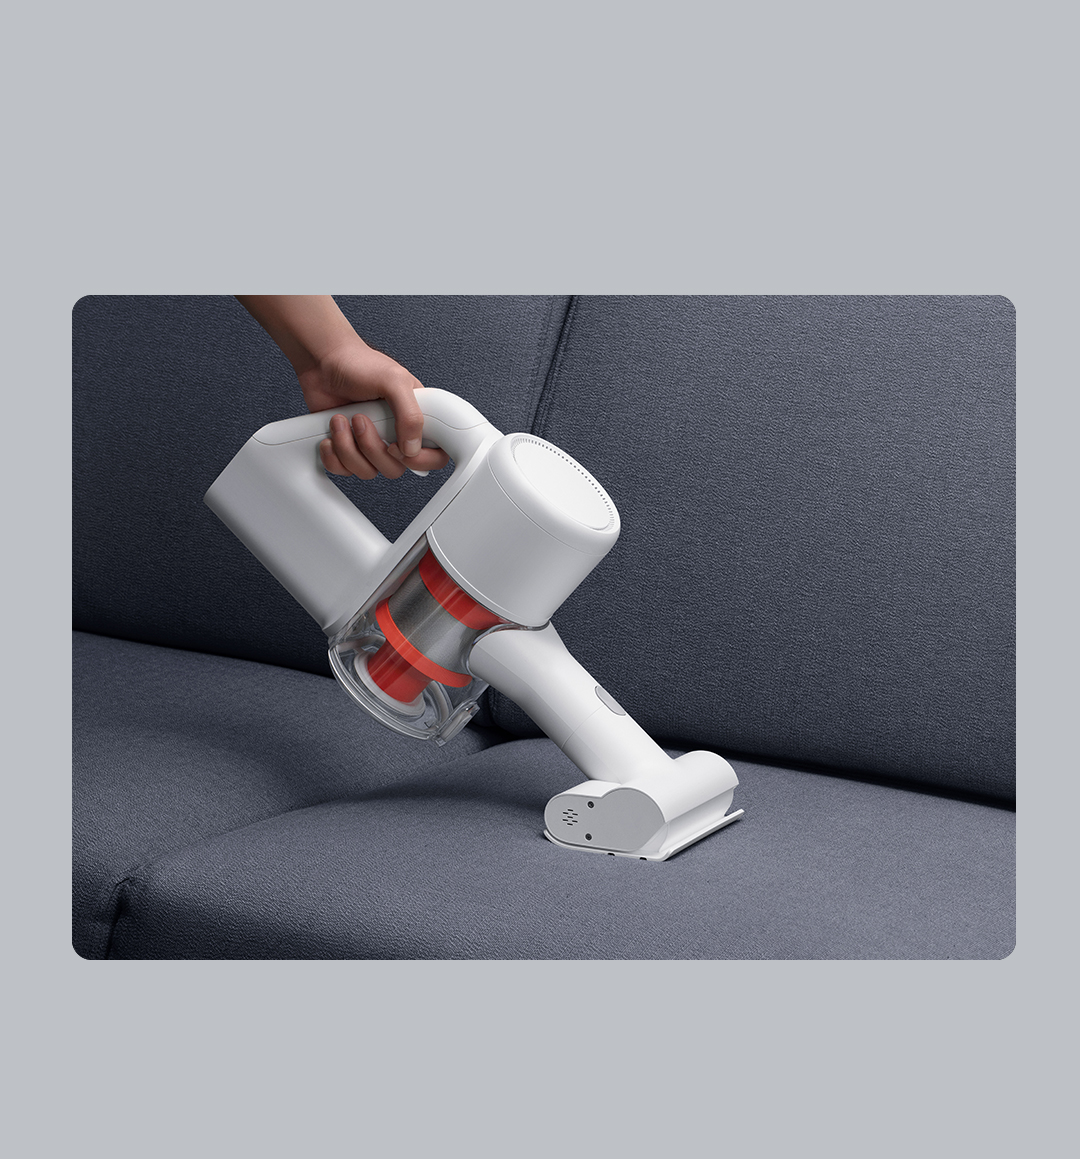 Mi Handheld Vacuum Cleaner丨Xiaomi Italia丨 - la pagina